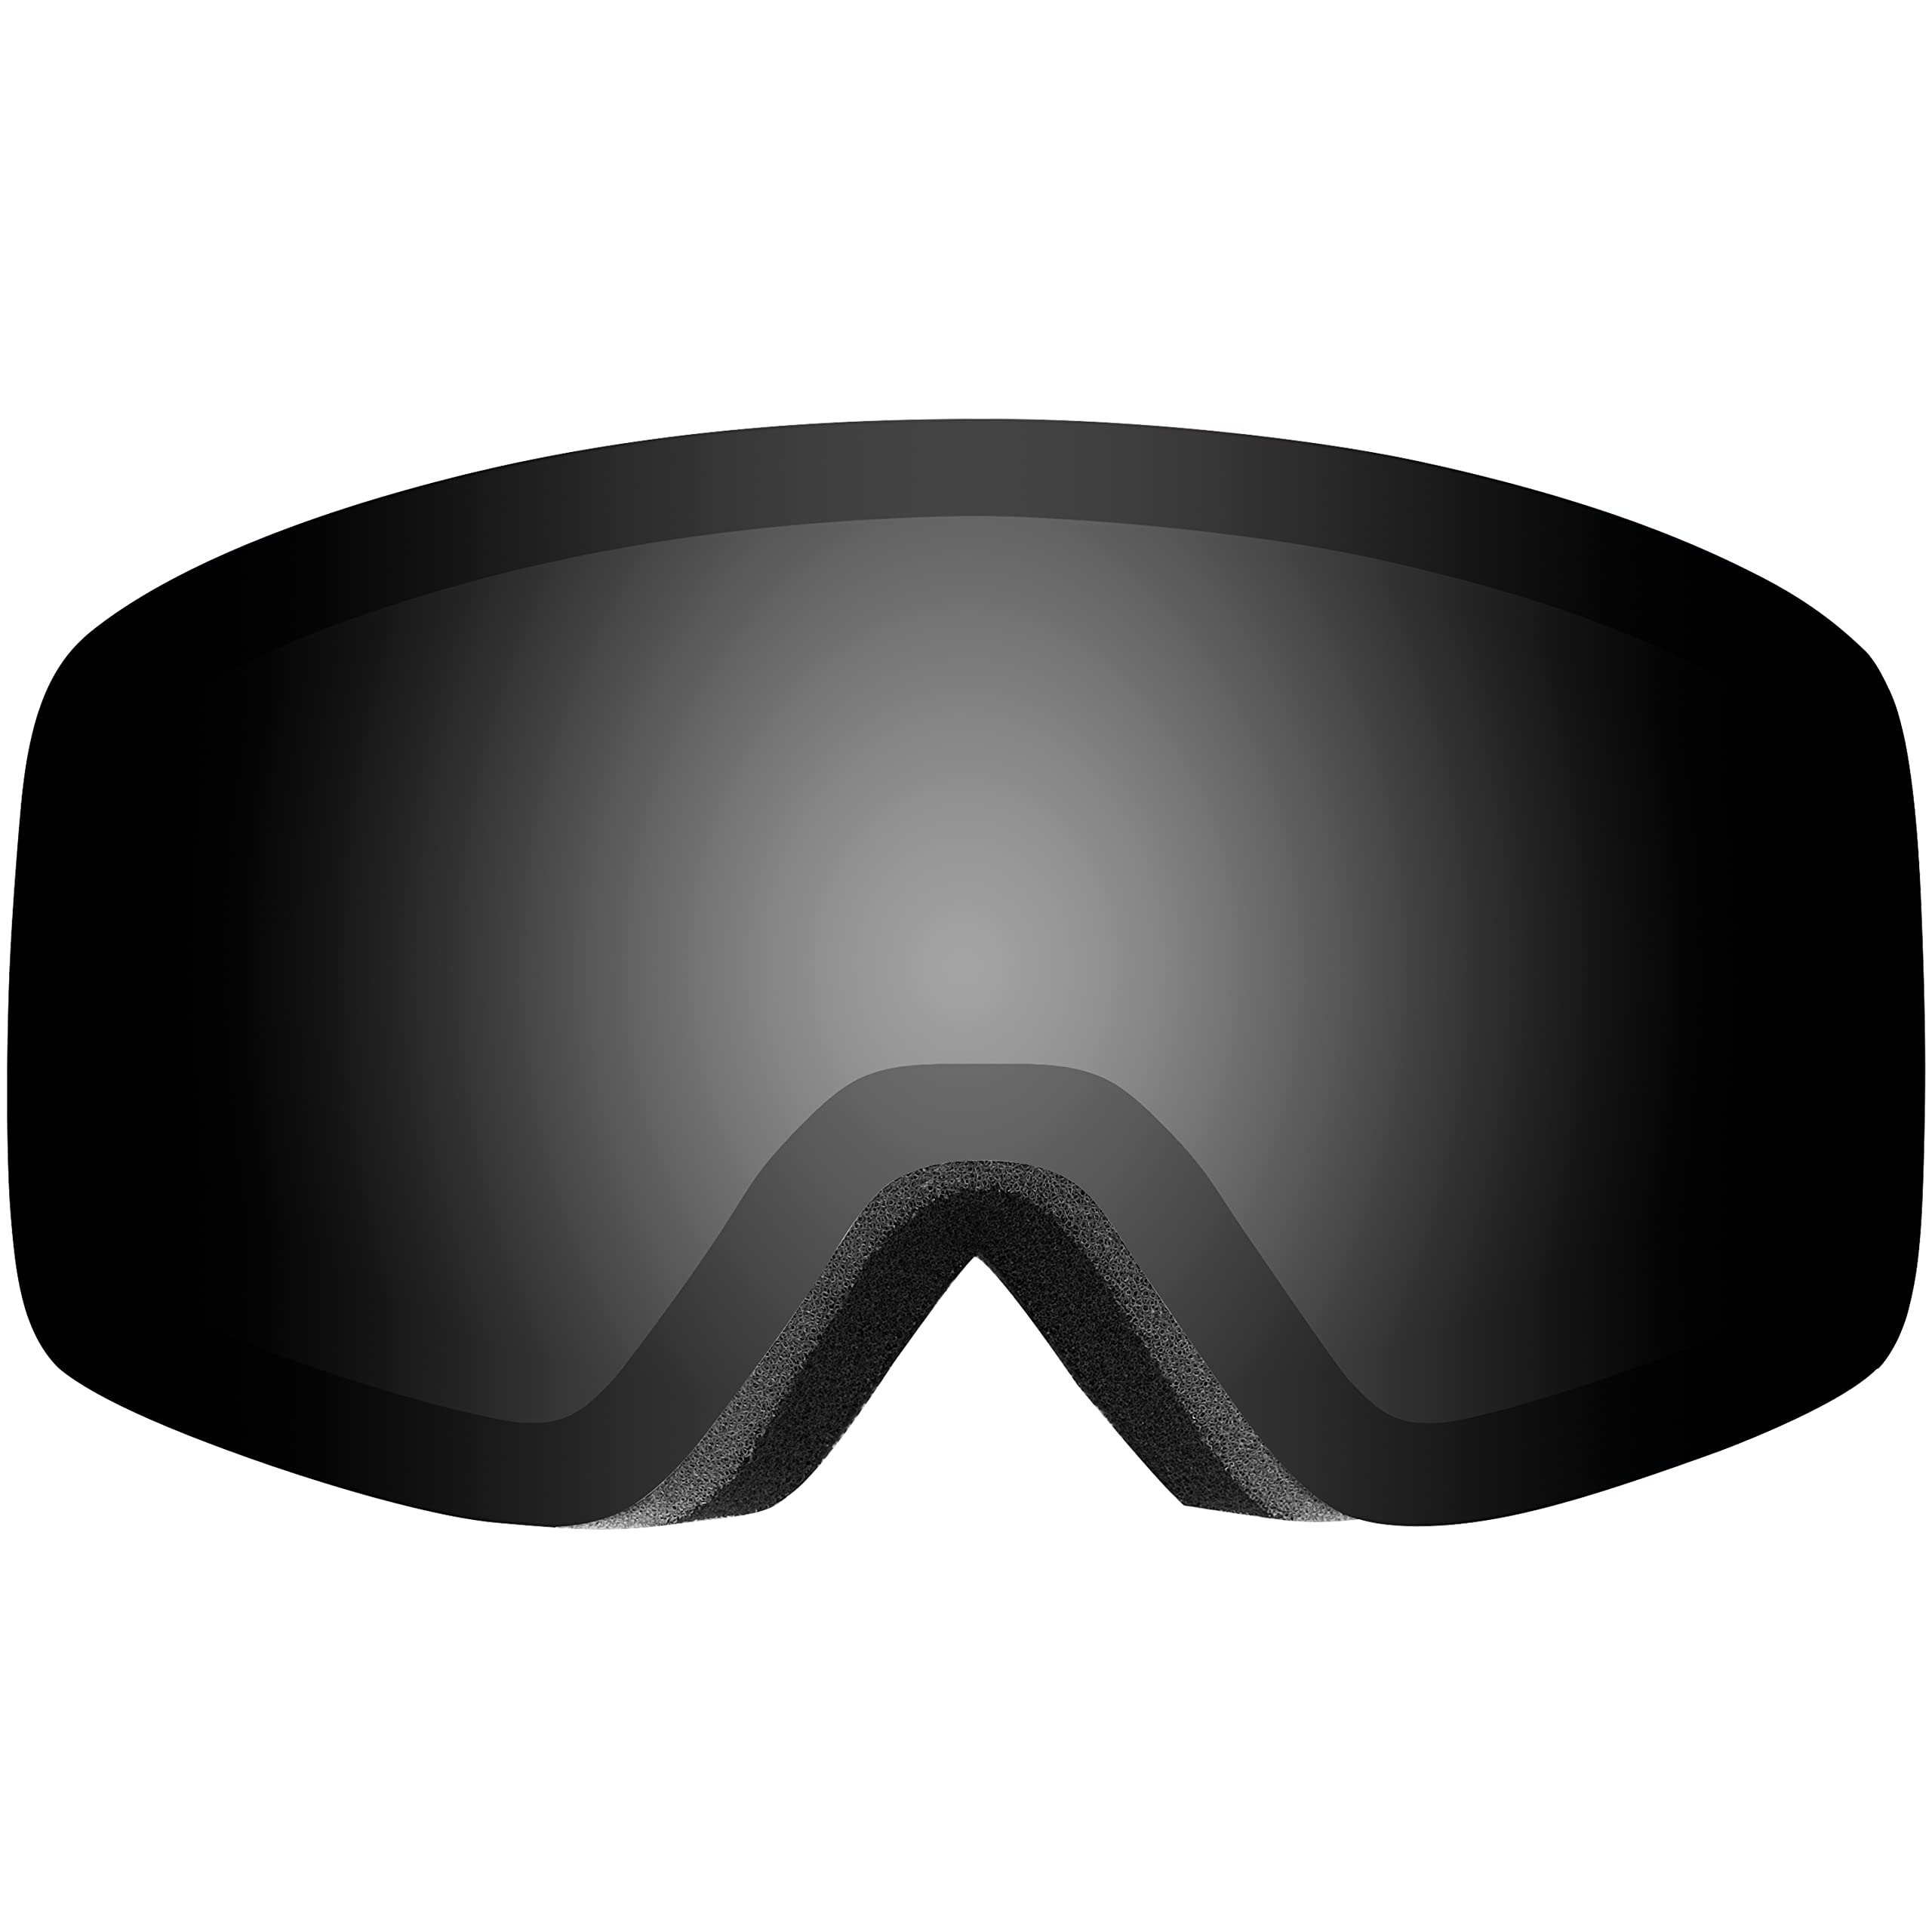 Retrospec Flume Ski Goggles for Men, Women, Boys & Girls, 100% UV Protection, Anti-Fog Snow Goggles for Skiing & Snowboarding